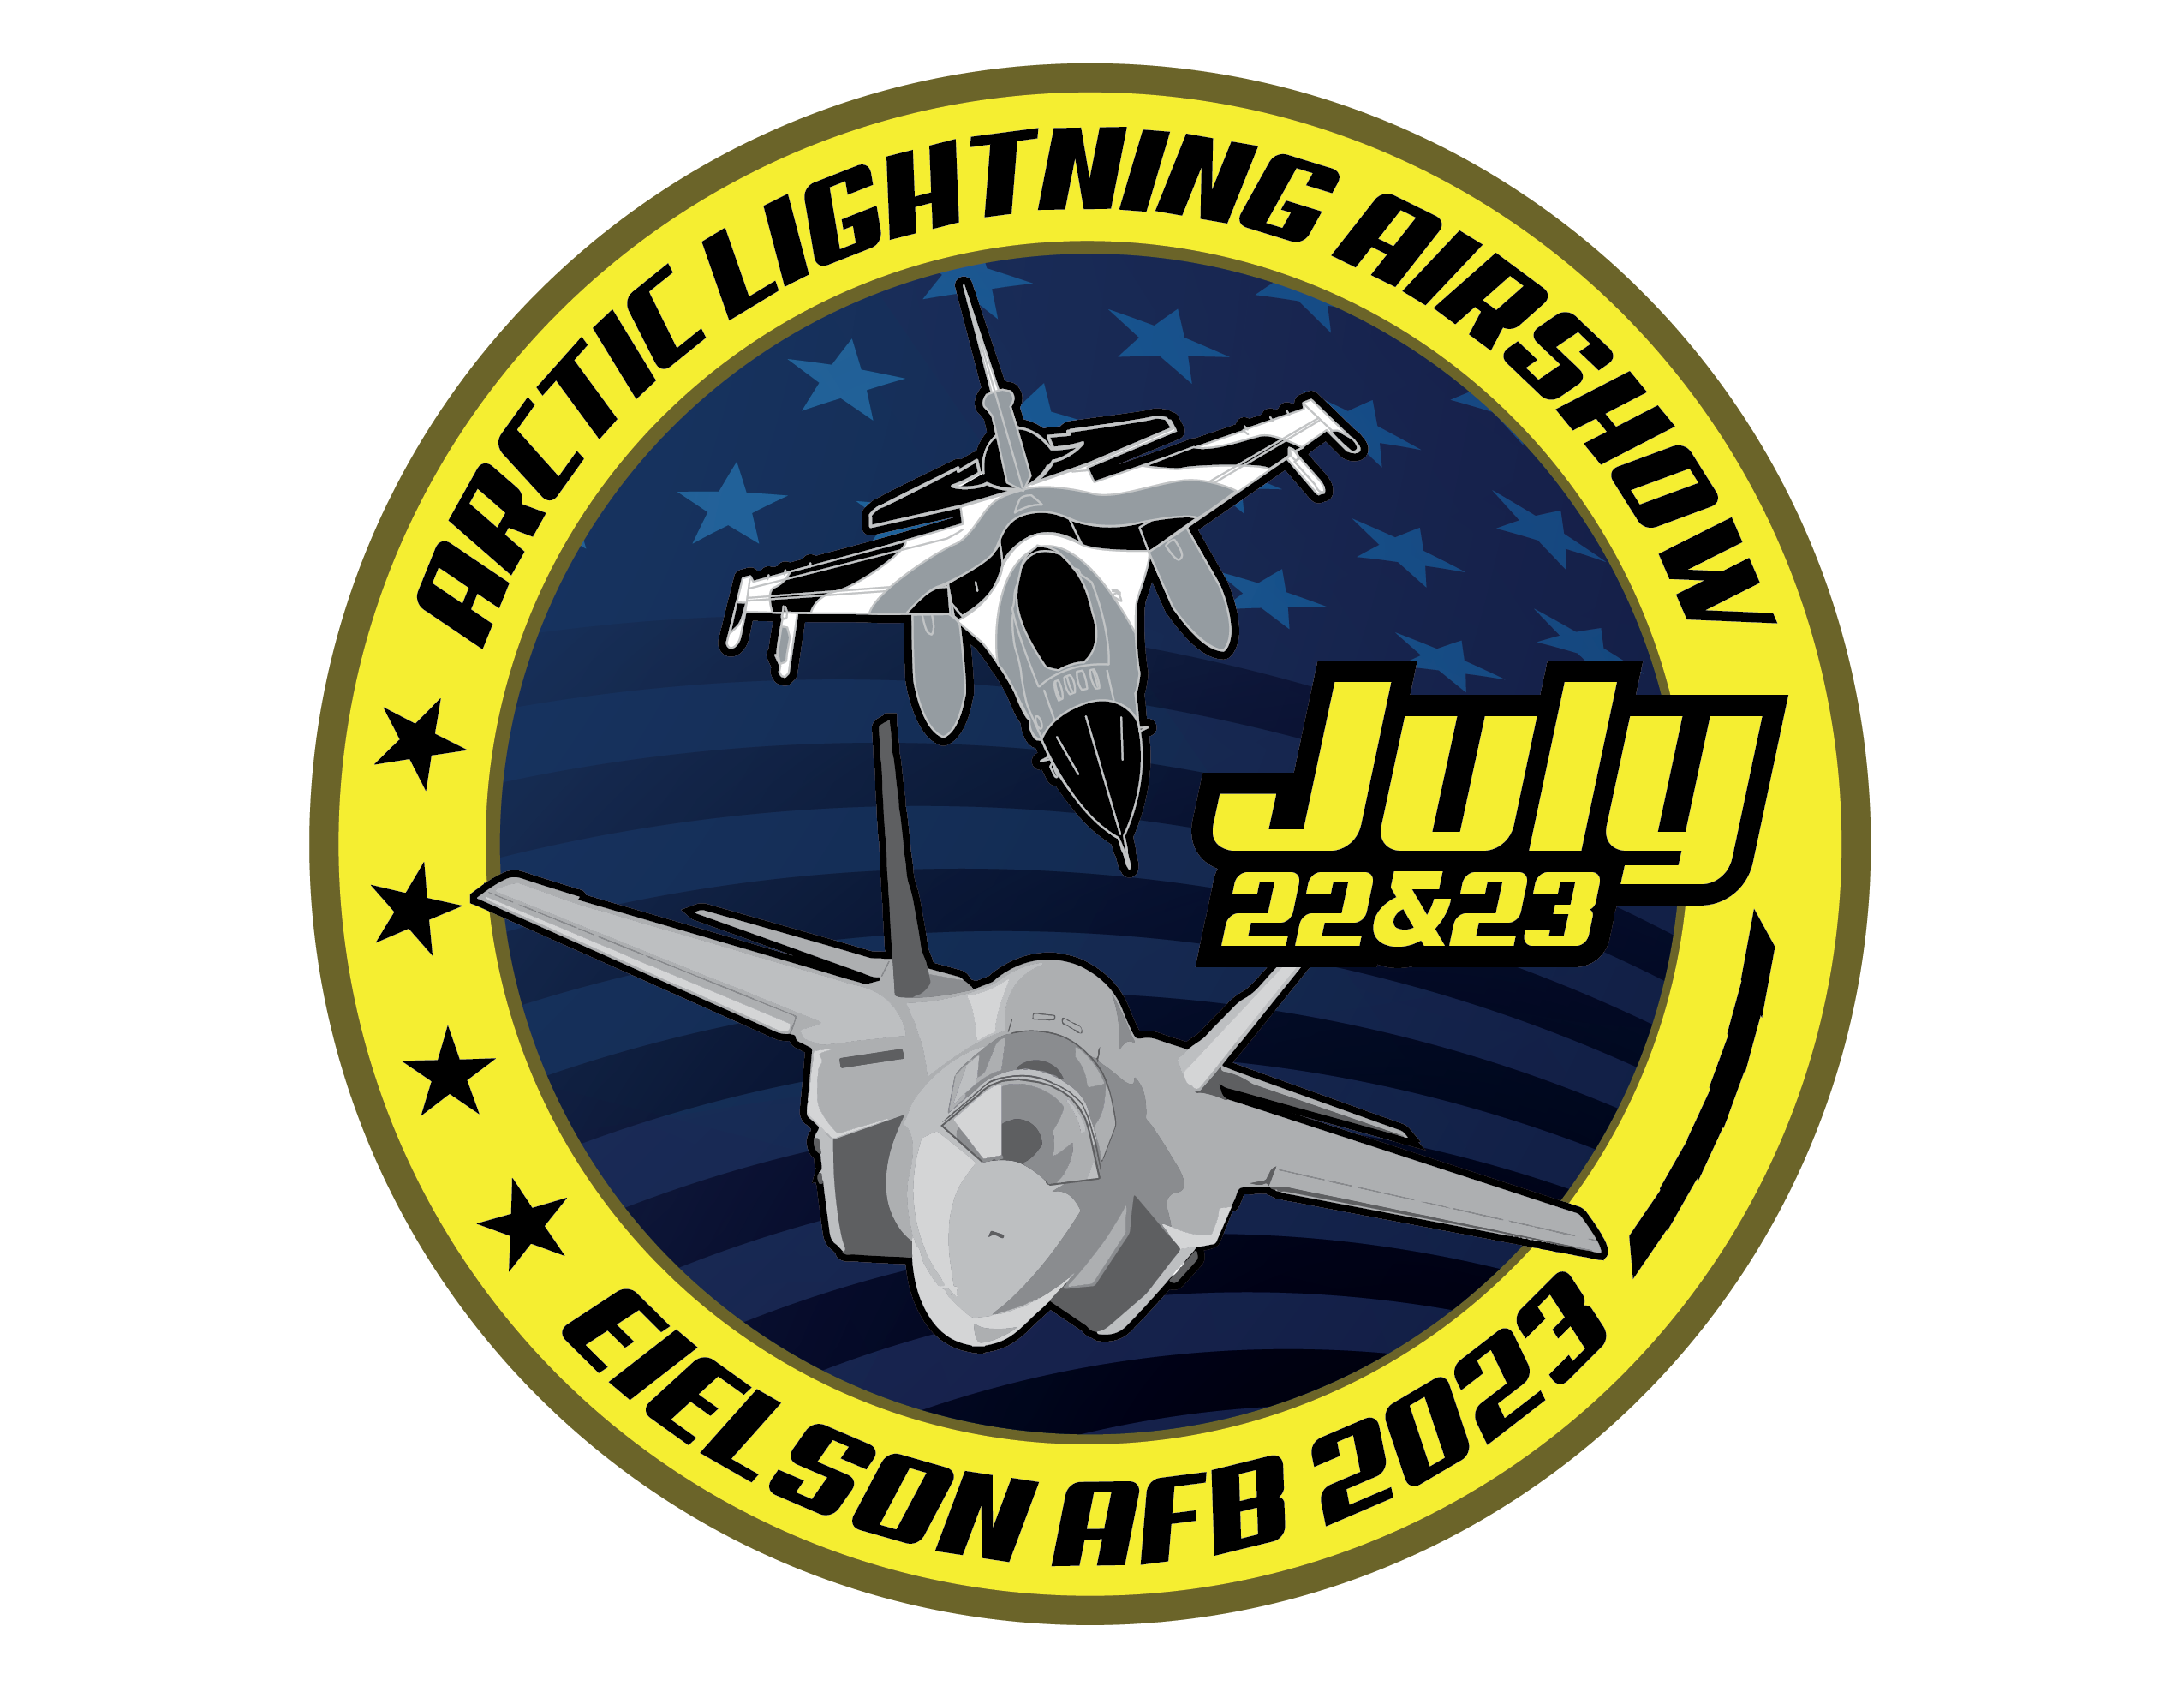 Arctic Lightning Airshow logo